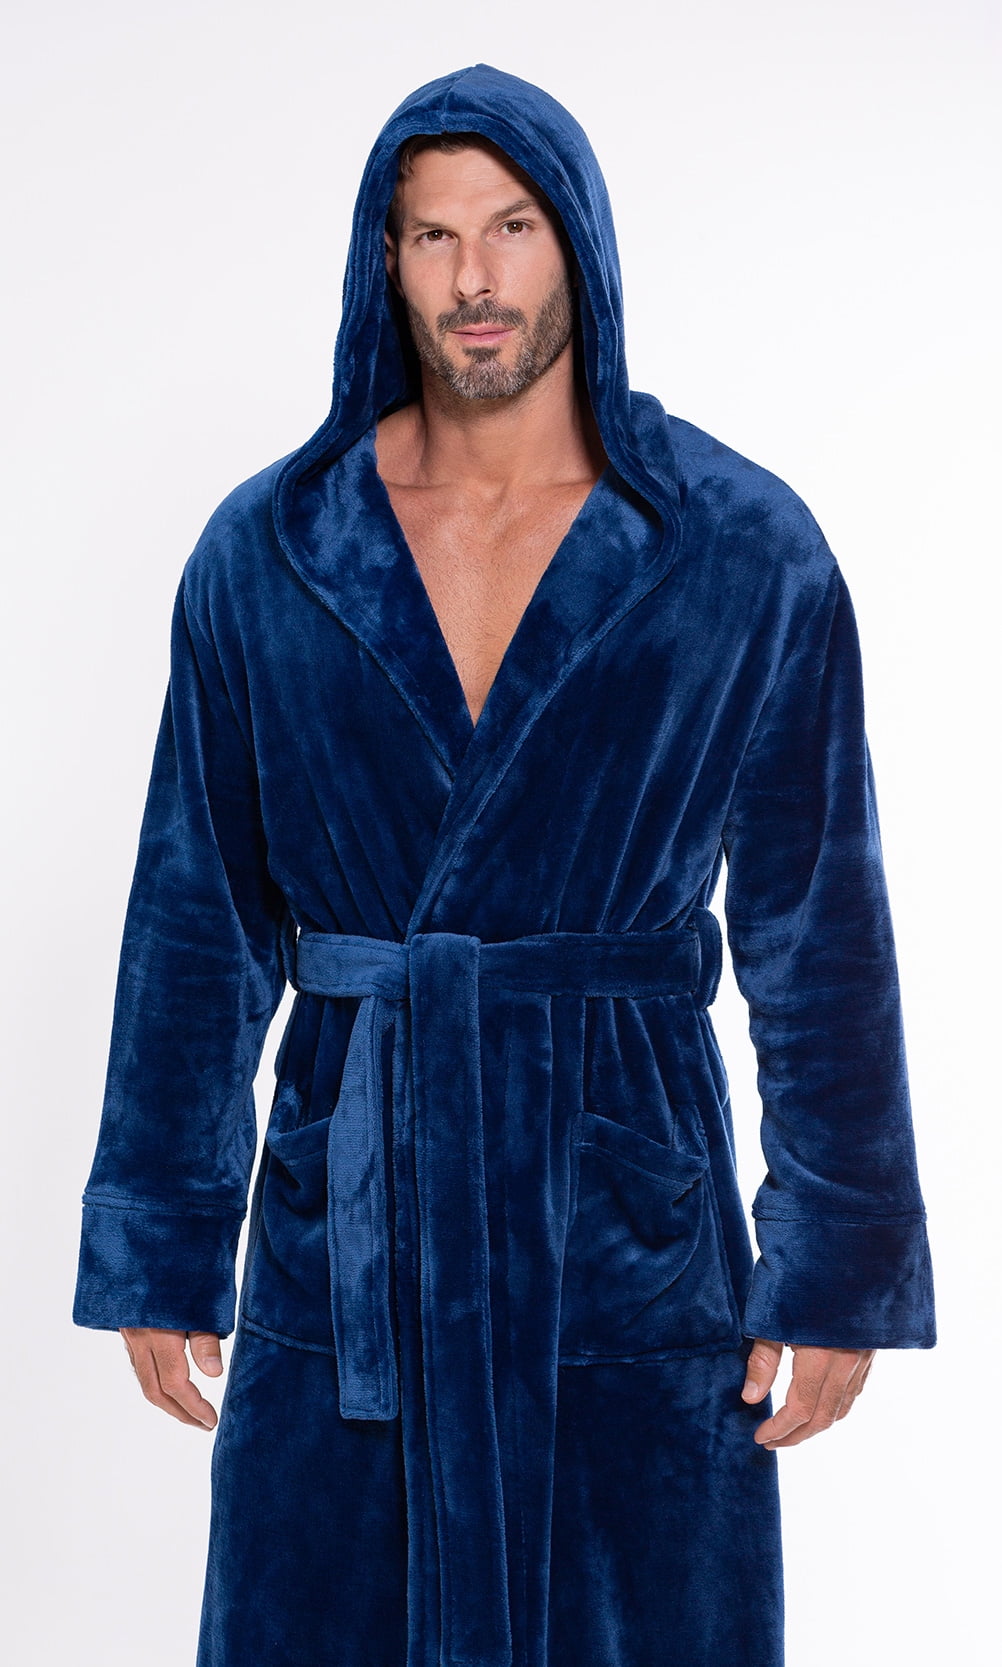 Men's White Plush Soft Warm Fleece Bathrobe with Hood, Comfy Men's Robe -  Small / Medium 